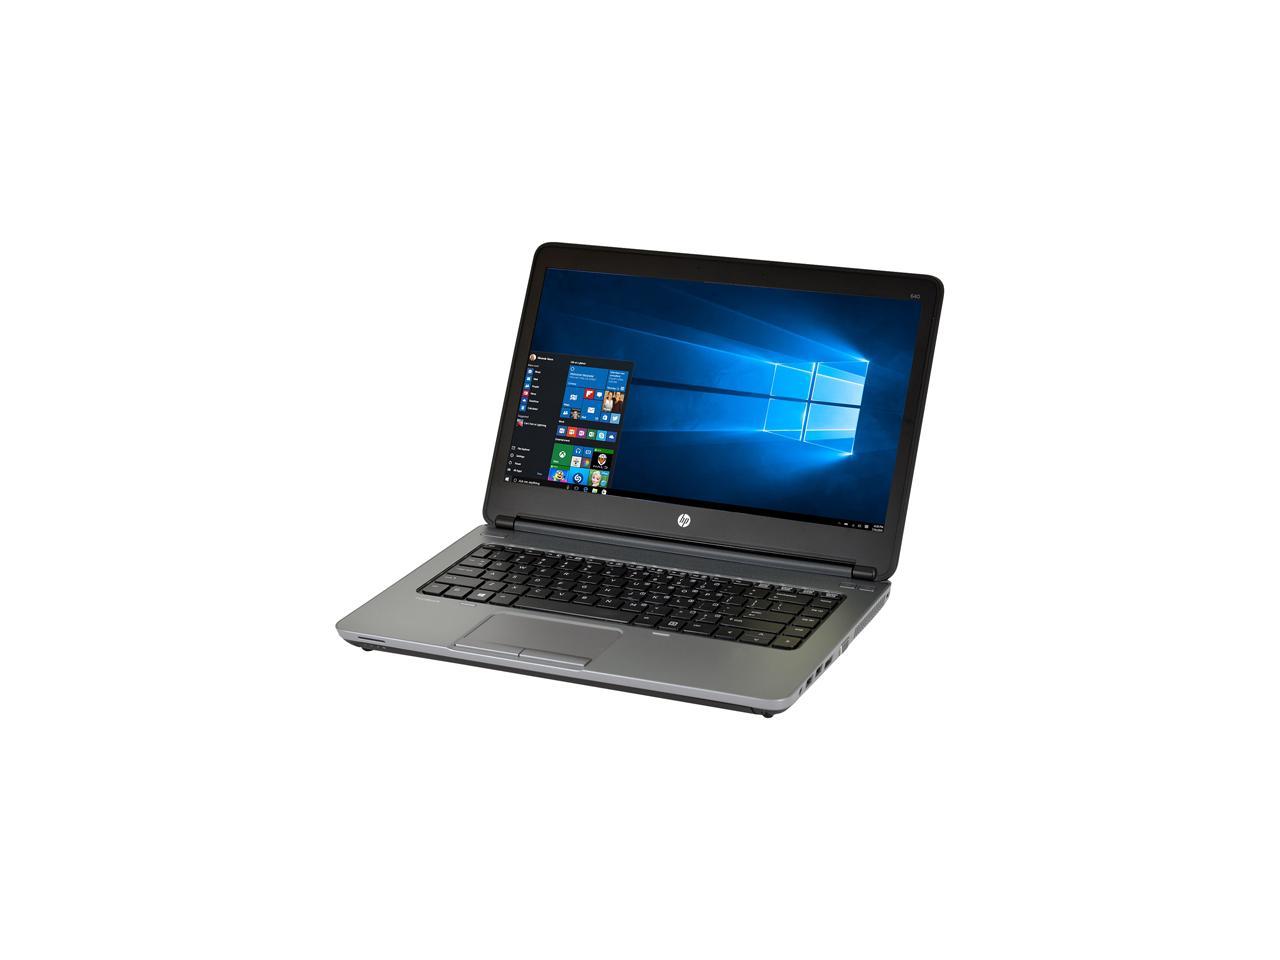 HP B Grade Laptop 640 G1 Intel Core i5 4th Gen 4300M (2.60 GHz) 8 GB Memory 320 GB HDD 14.0" Windows 10 Home 64-Bit